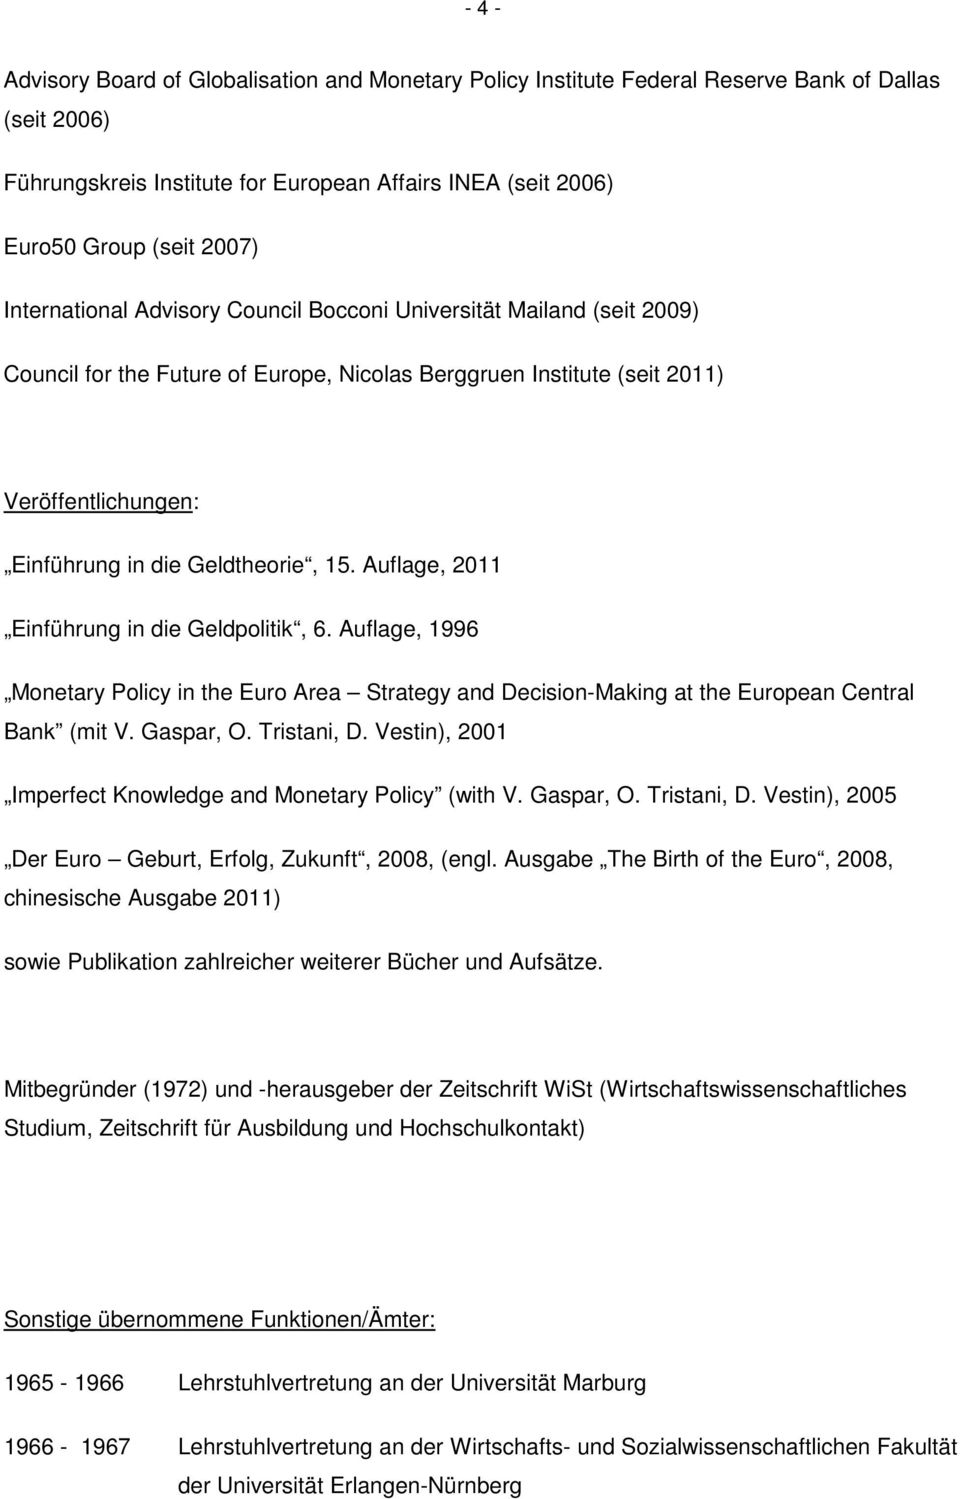 Auflage, 2011 Einführung in die Geldpolitik, 6. Auflage, 1996 Monetary Policy in the Euro Area Strategy and Decision-Making at the European Central Bank (mit V. Gaspar, O. Tristani, D.